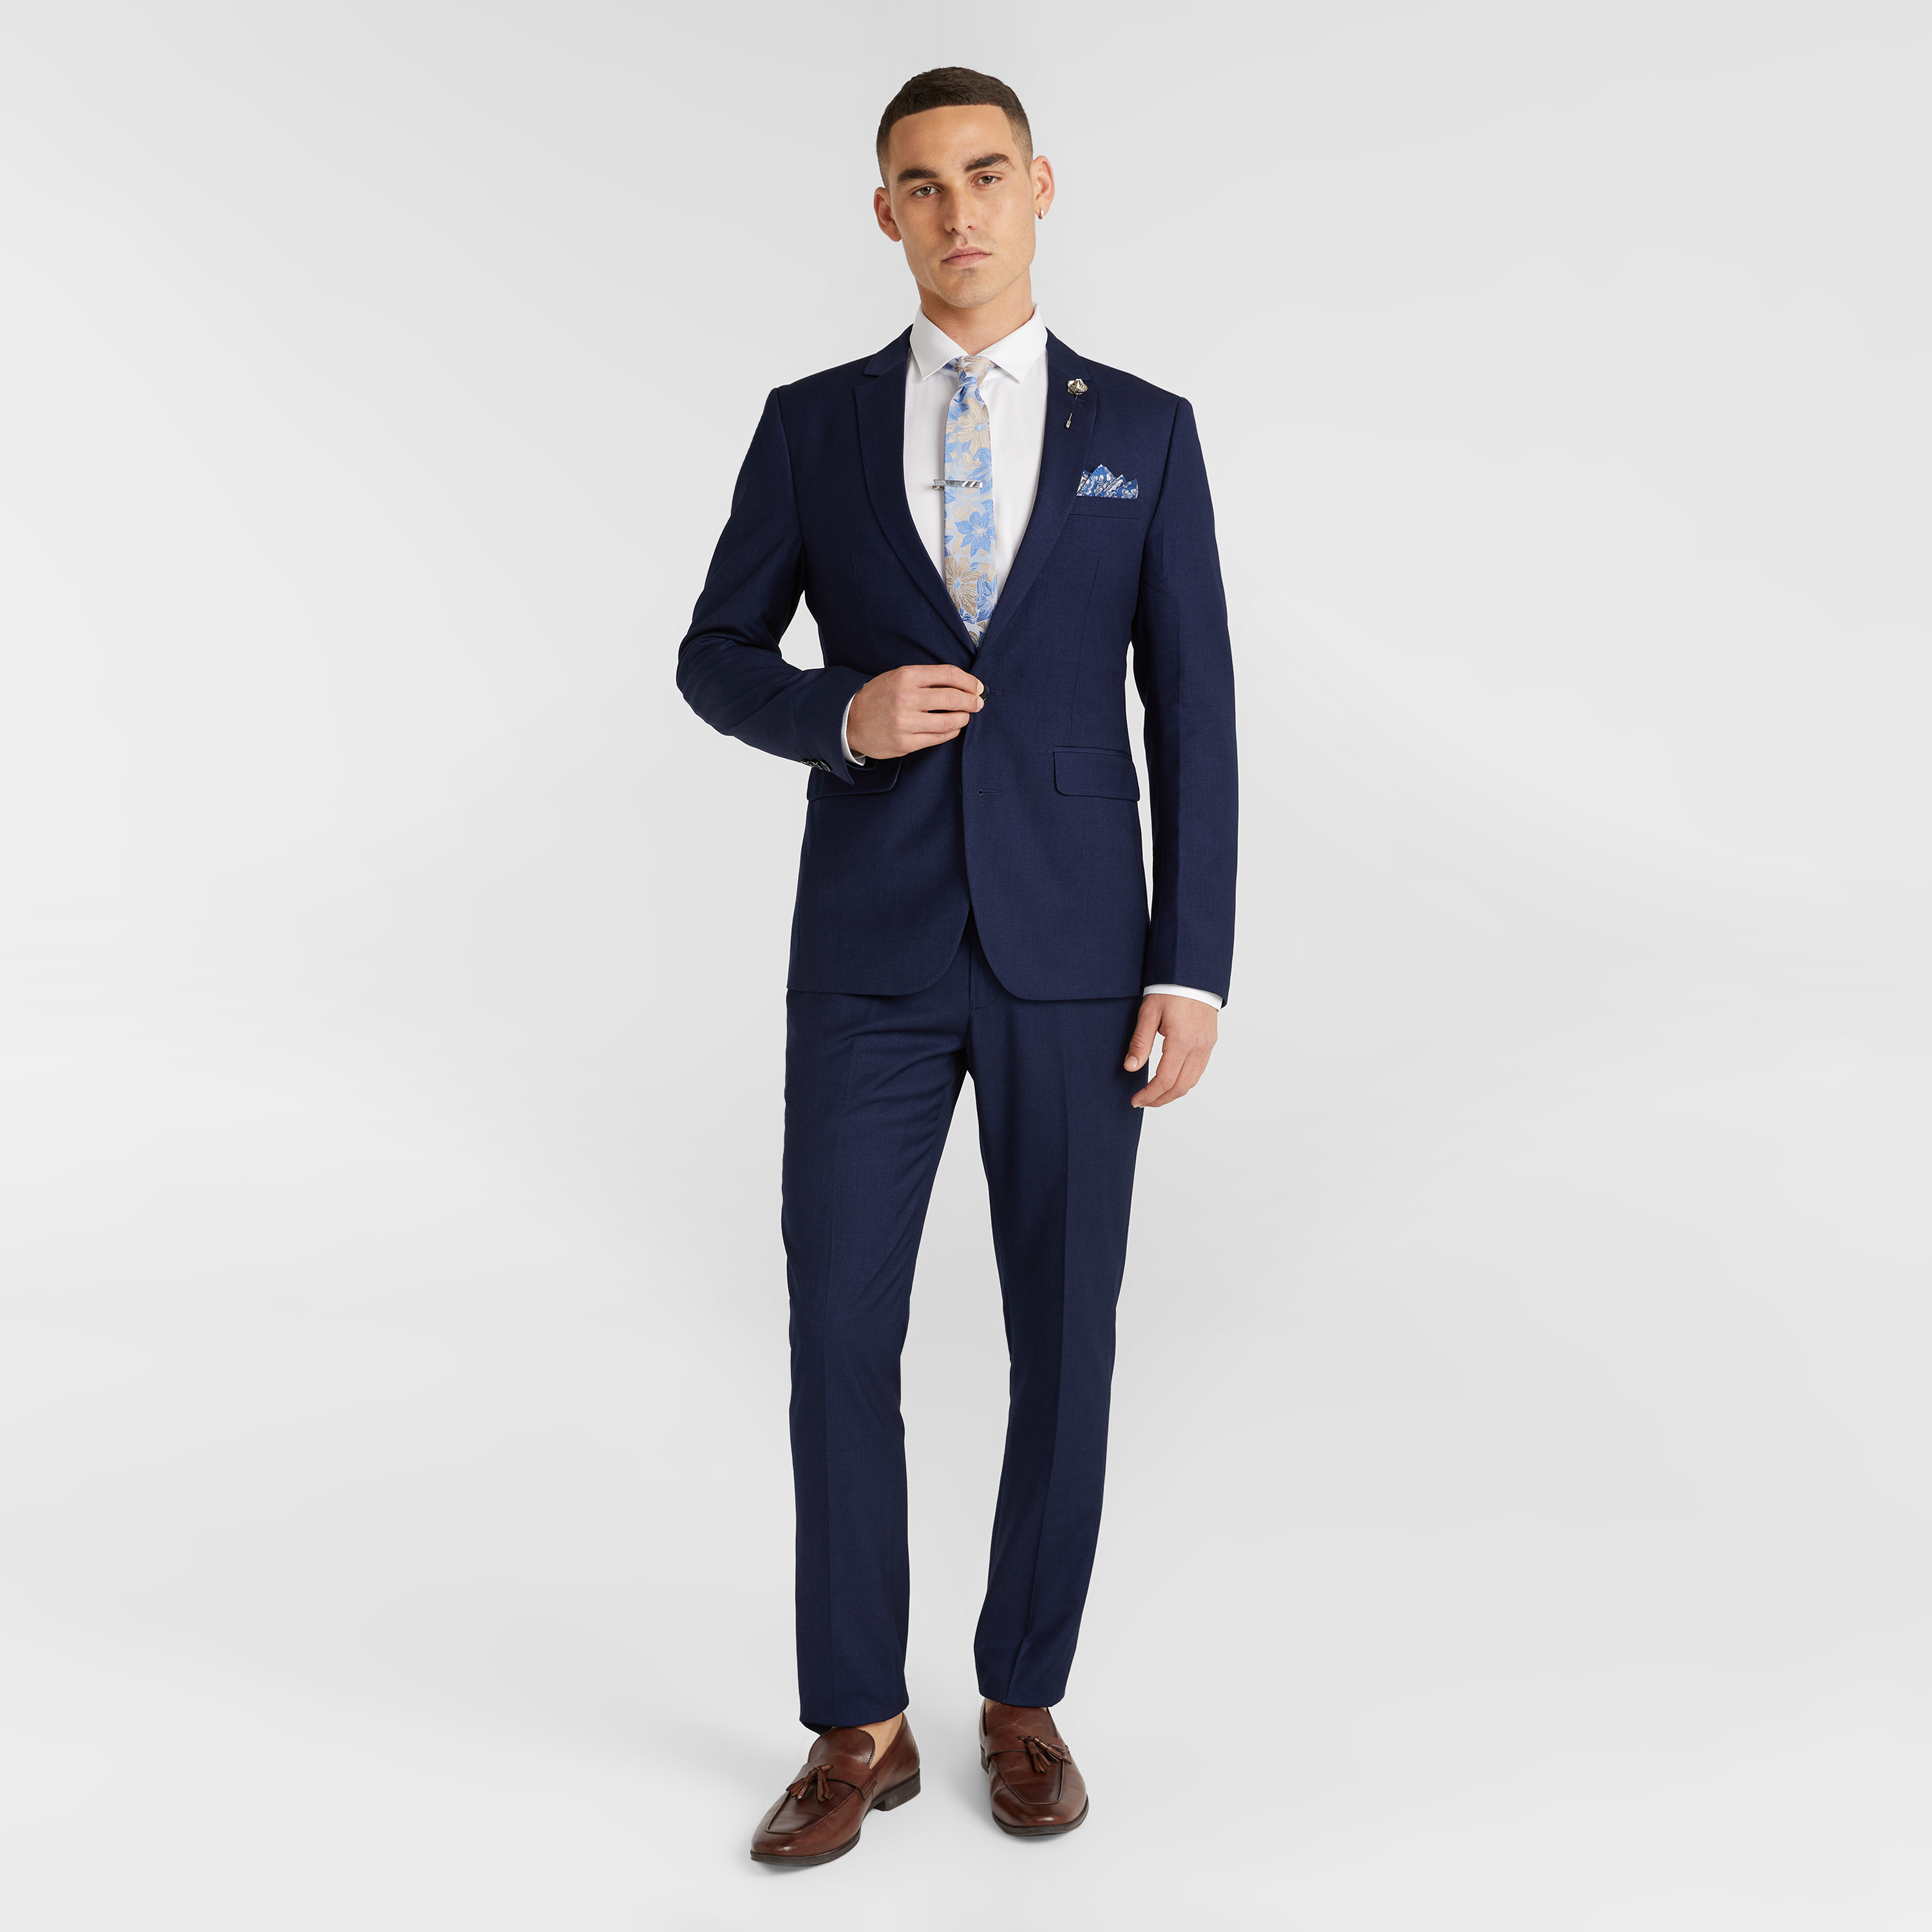 Red Single Lester Tie/accessory discount 98% MEN FASHION Suits & Sets Elegant 